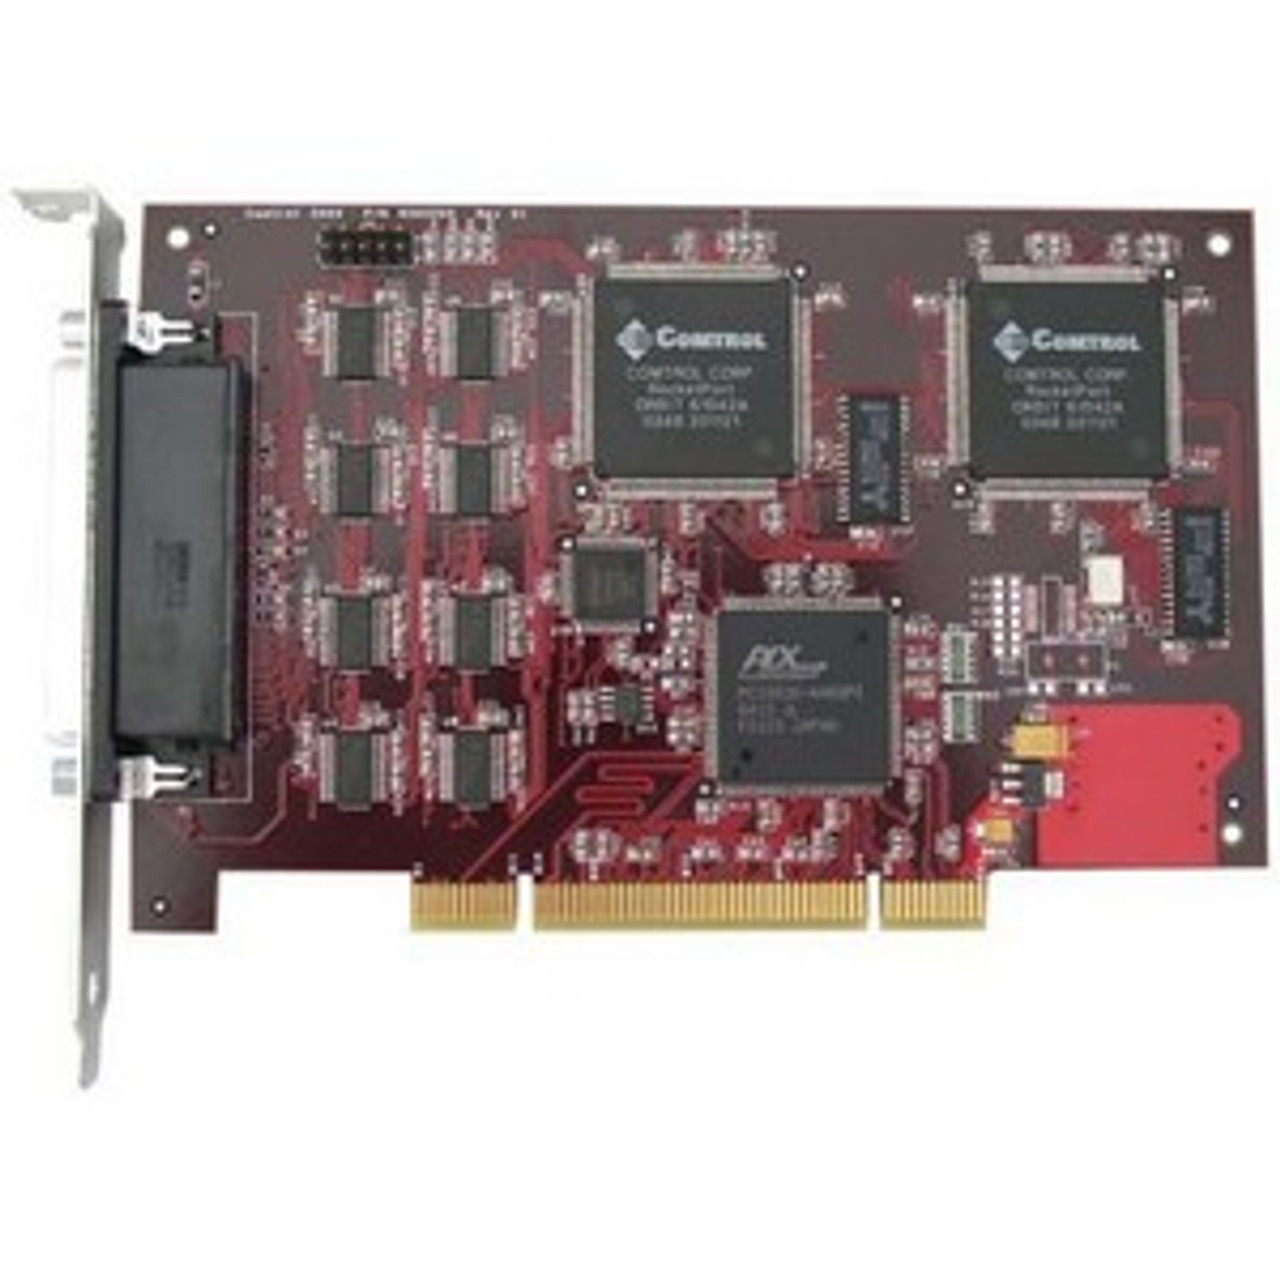 99425-1 Comtrol RocketPort Plus uPCI Quad DB9 Multiport Serial Adapter Universal PCI 4 x DB-9 Male RS-232 Serial Plug-in Card (Refurbished)